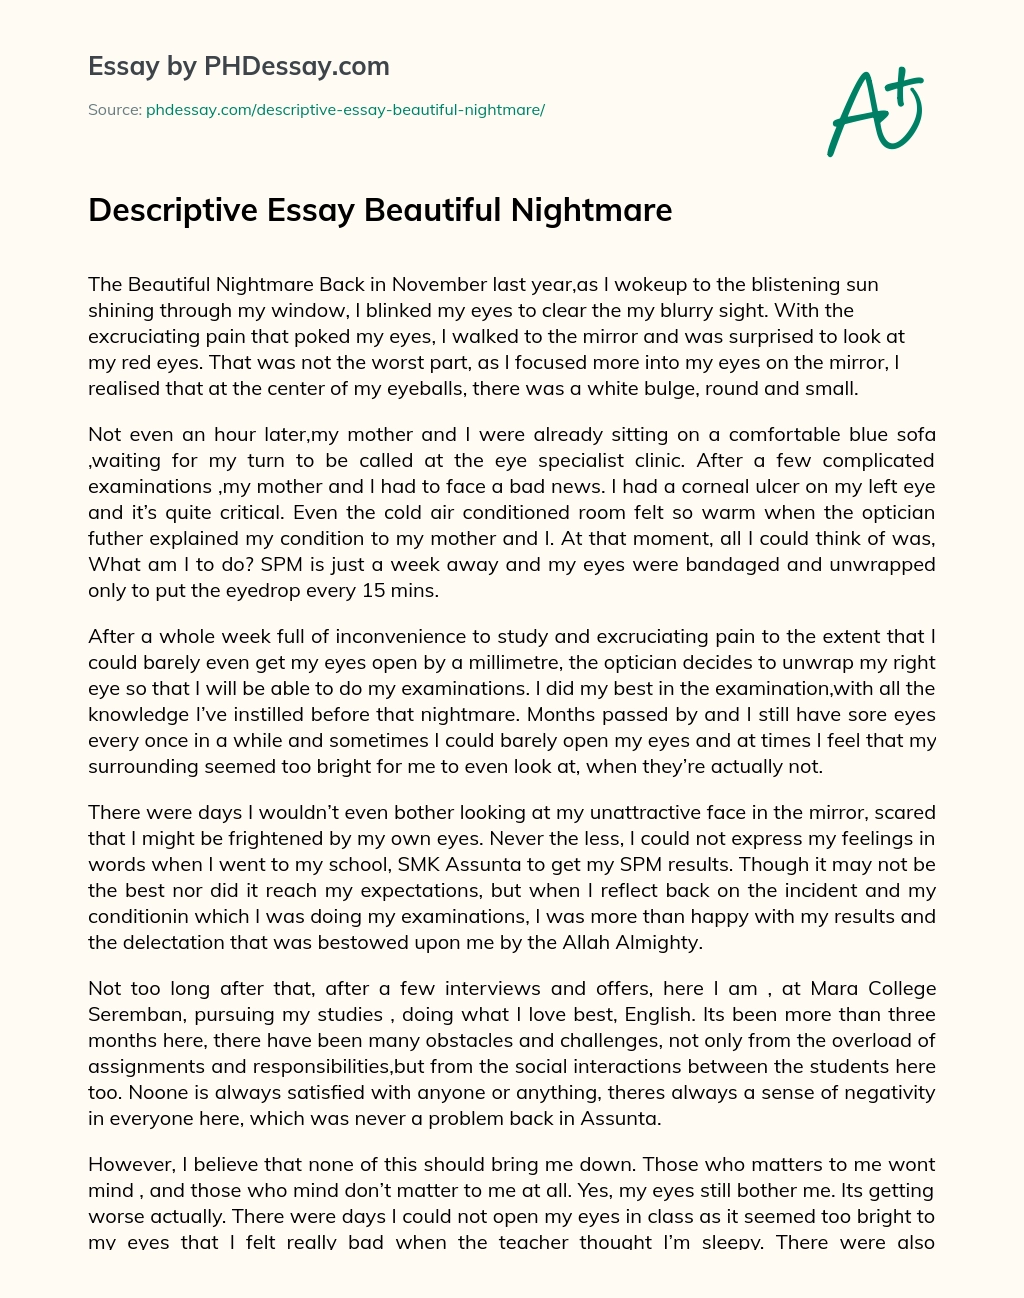 Descriptive Essay Beautiful Nightmare essay